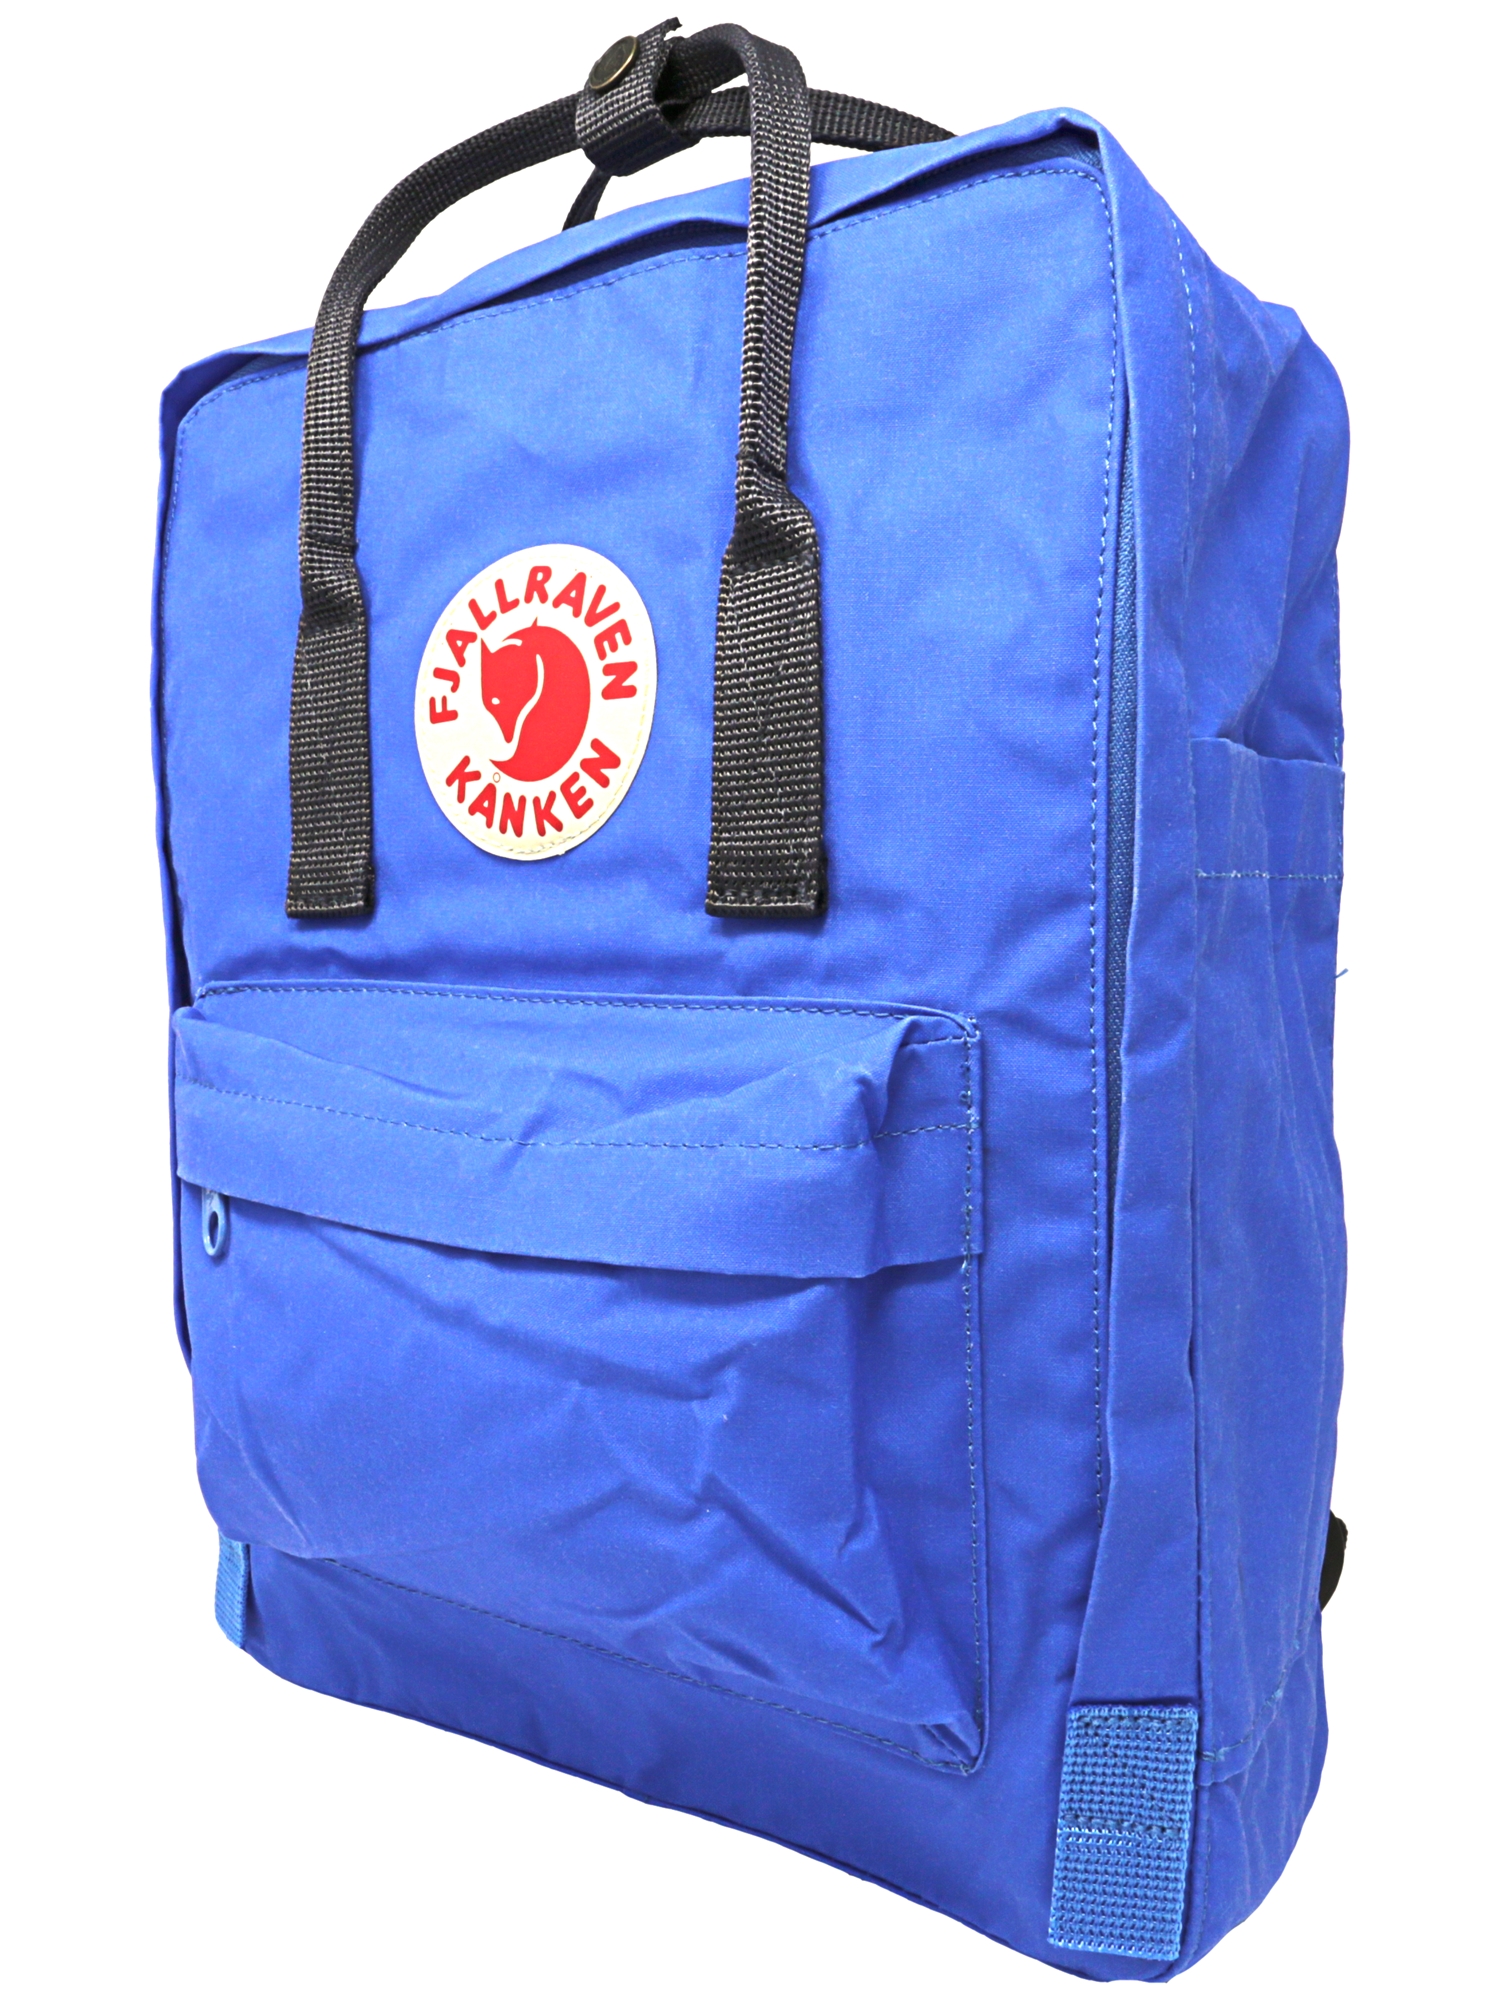 Fjallraven - Kanken Classic Backpack for Everyday - UN Blue/Navy - image 3 of 4